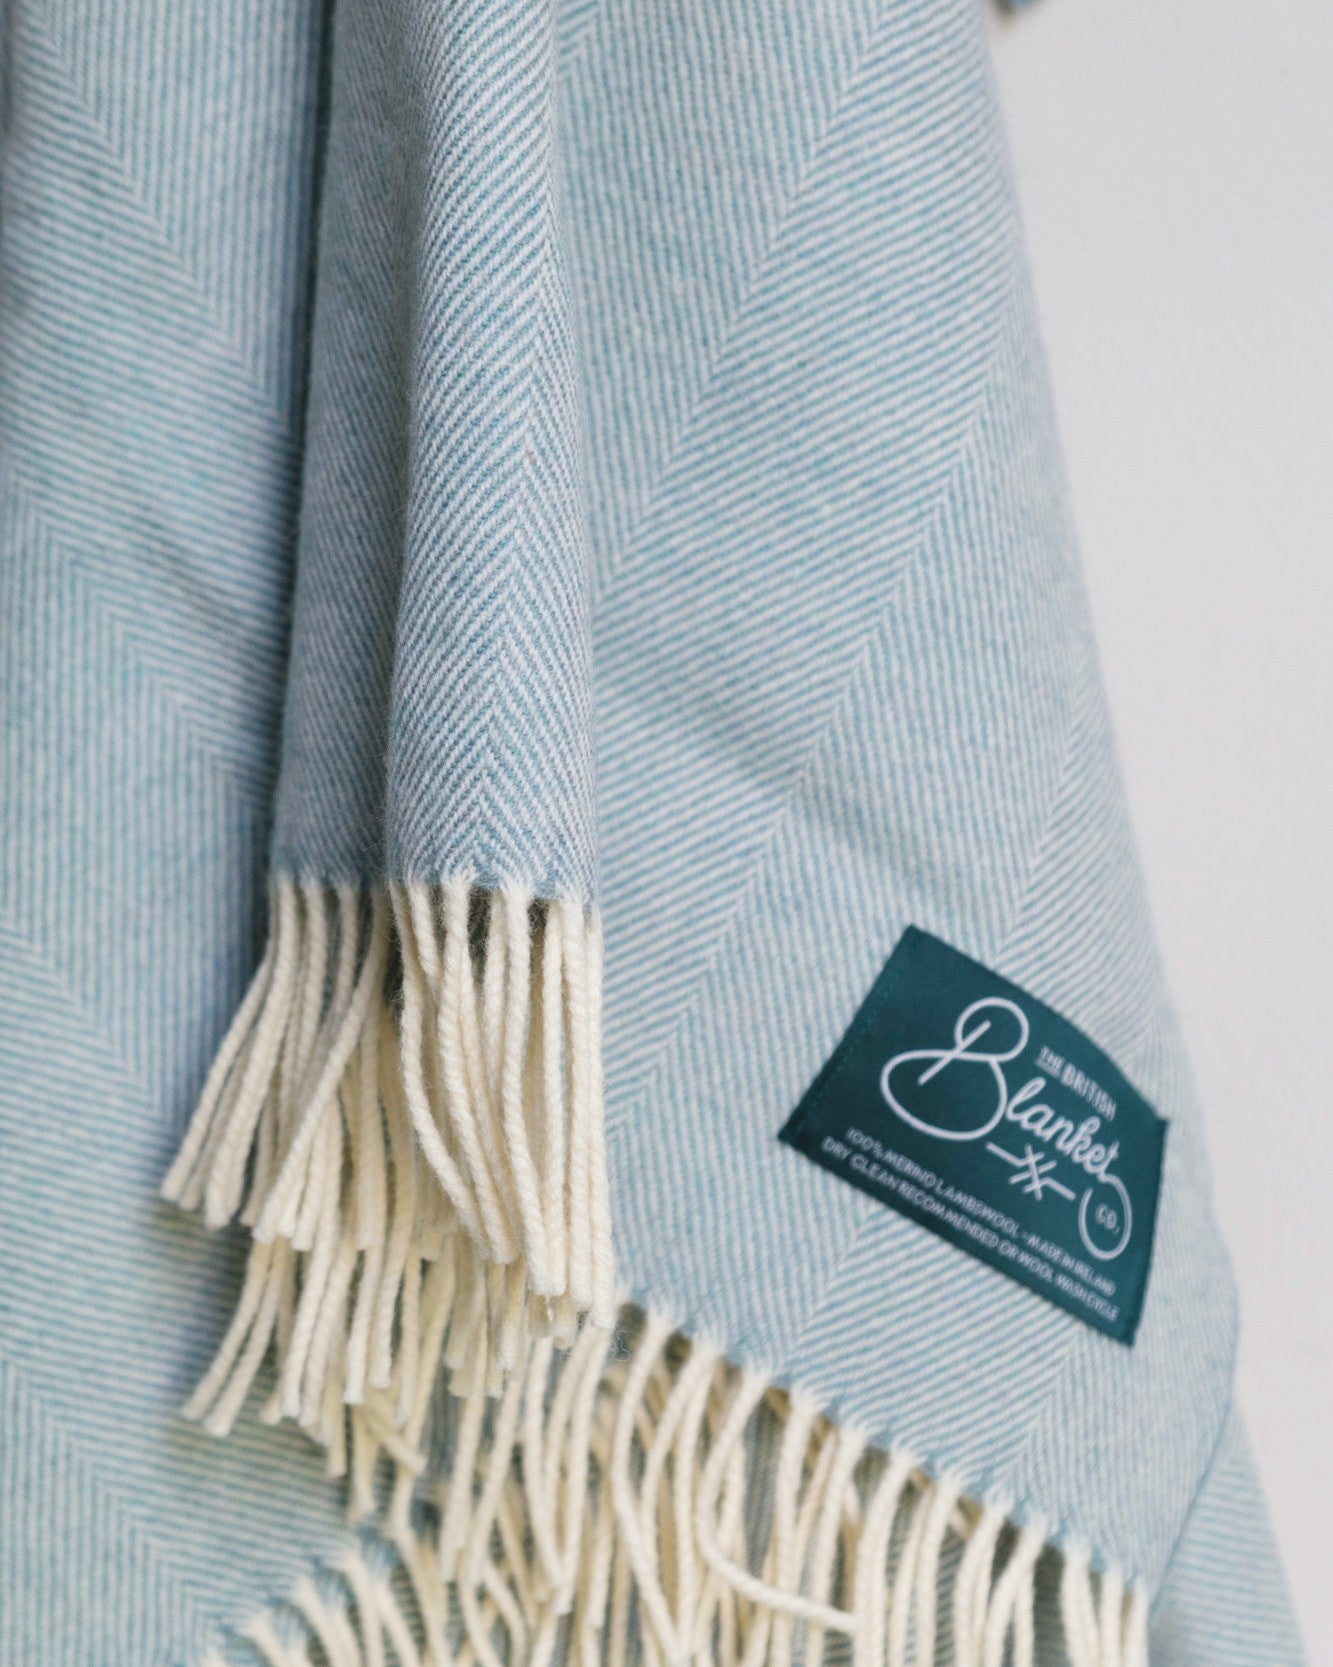 Topaz Blue Merino Wool Throw from The British Blanket Company